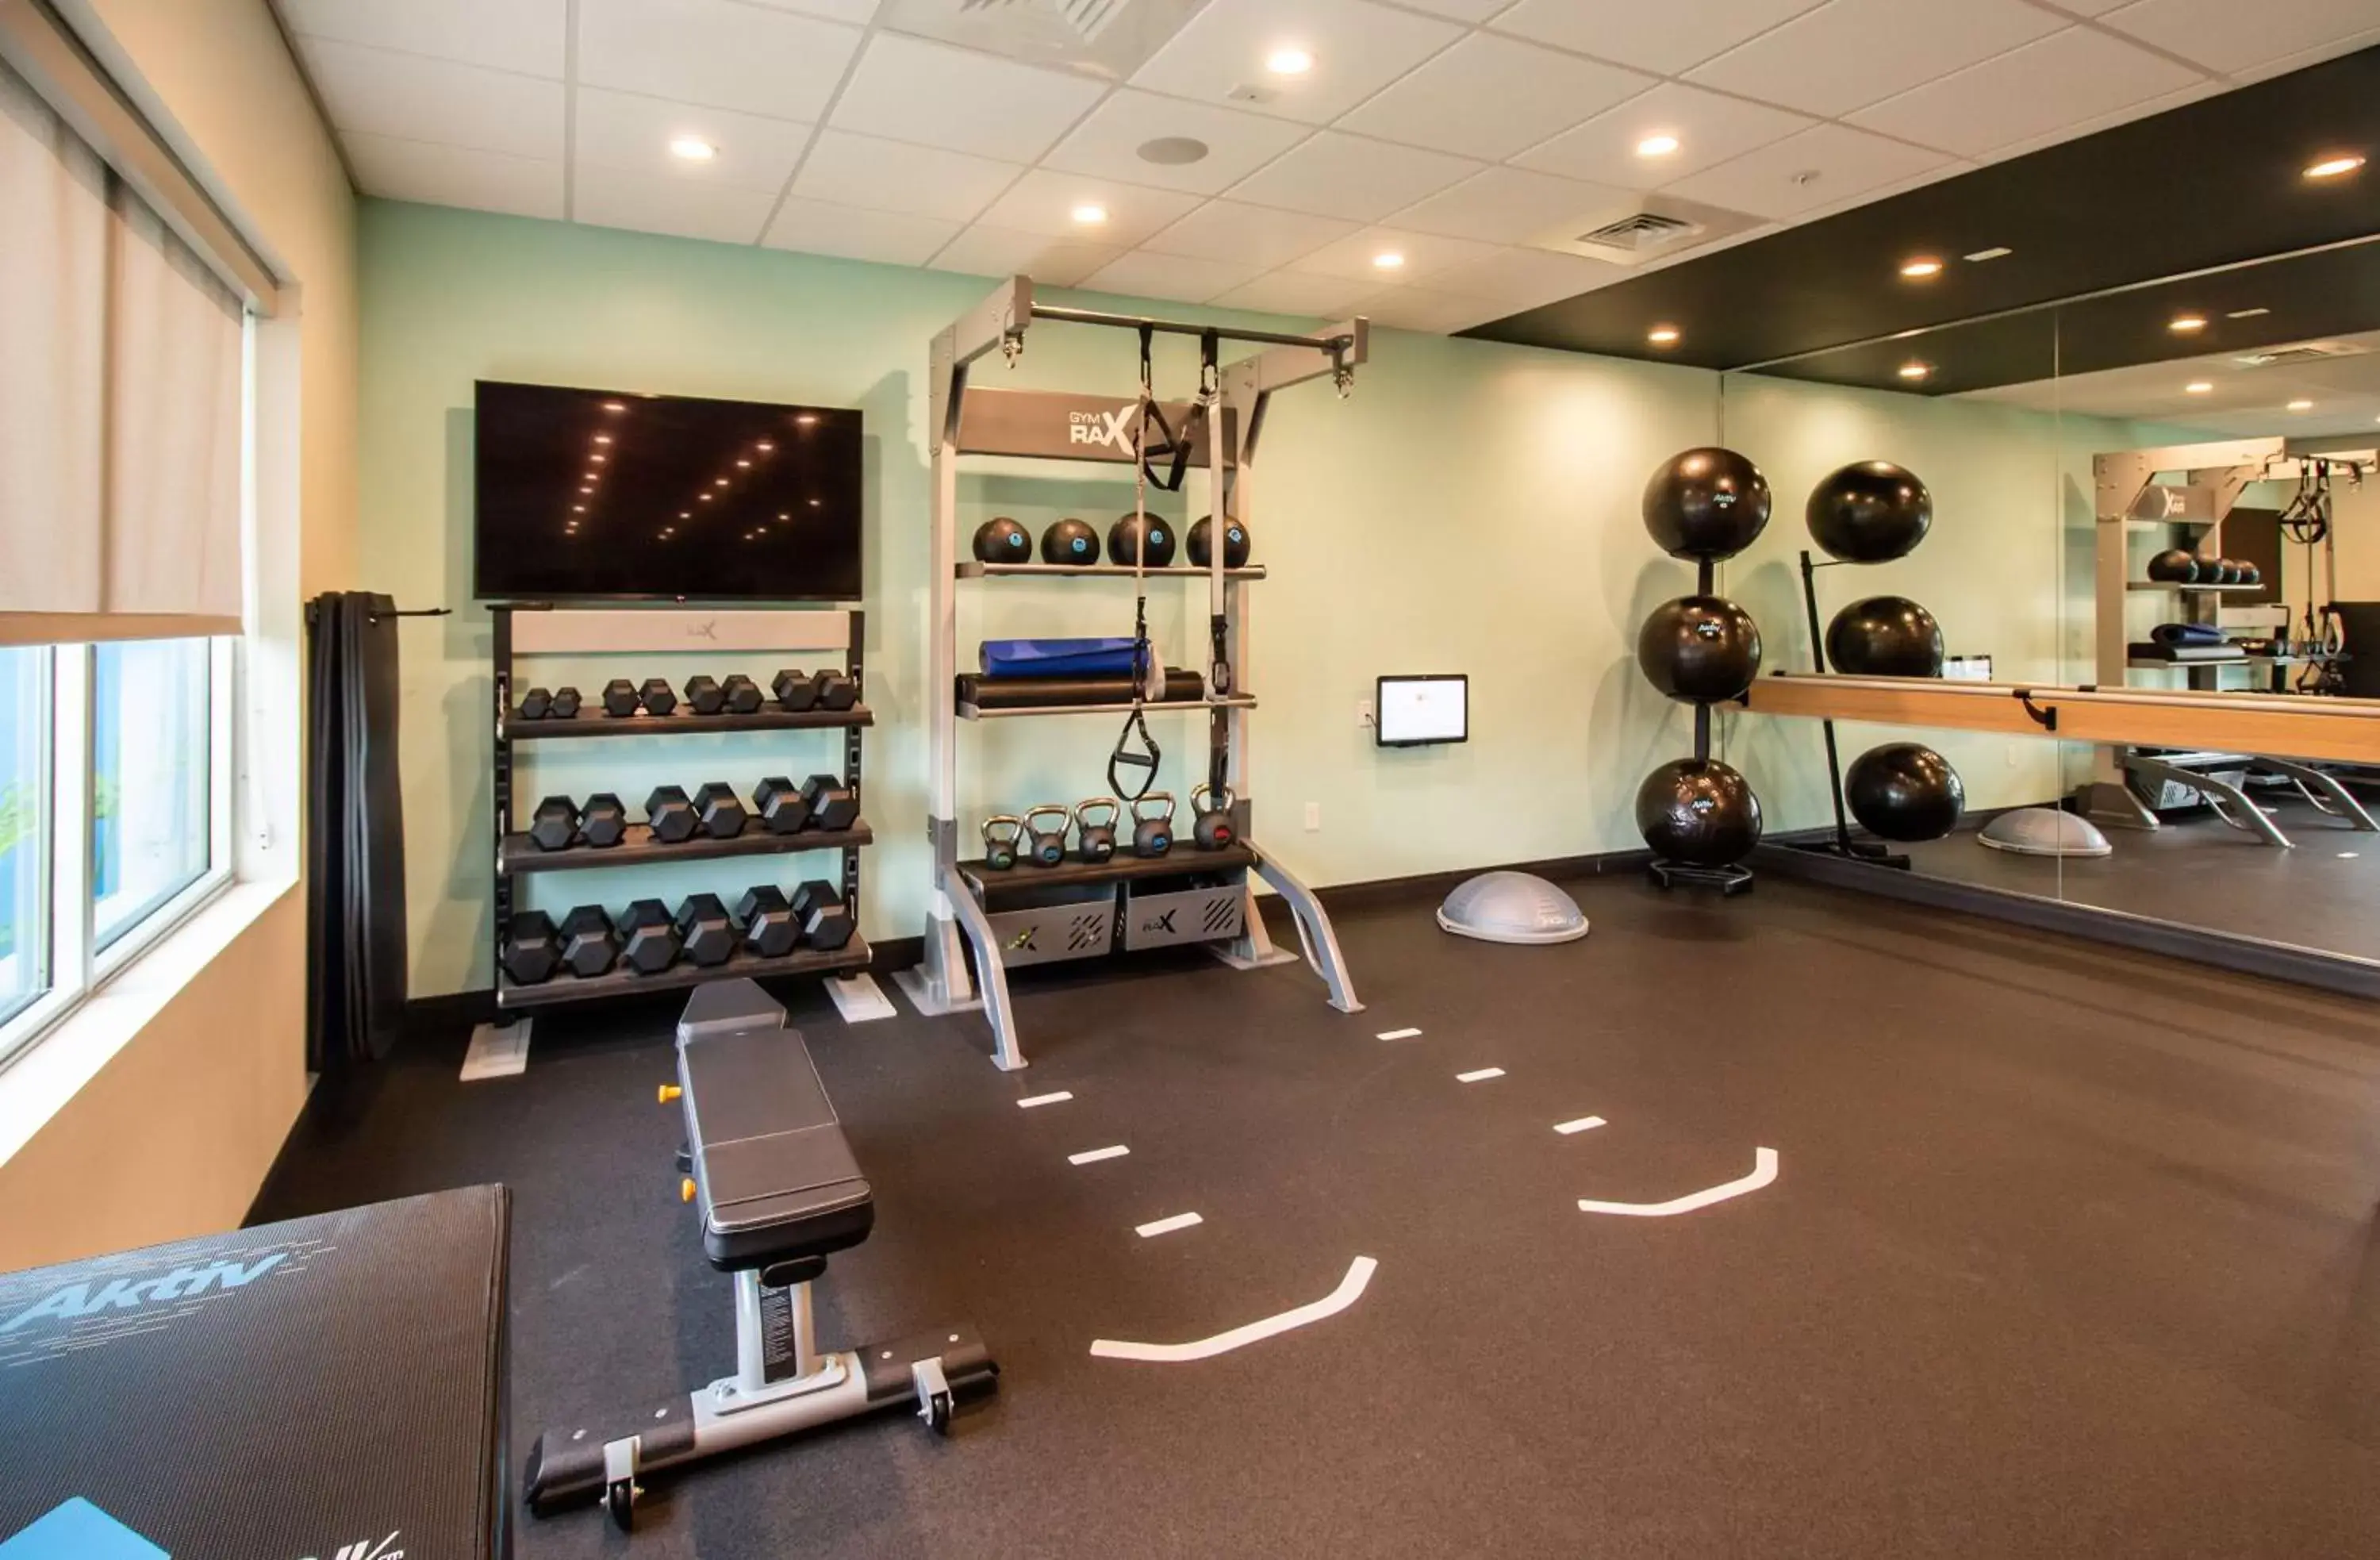 Fitness centre/facilities, Fitness Center/Facilities in Tru By Hilton Niceville, Fl